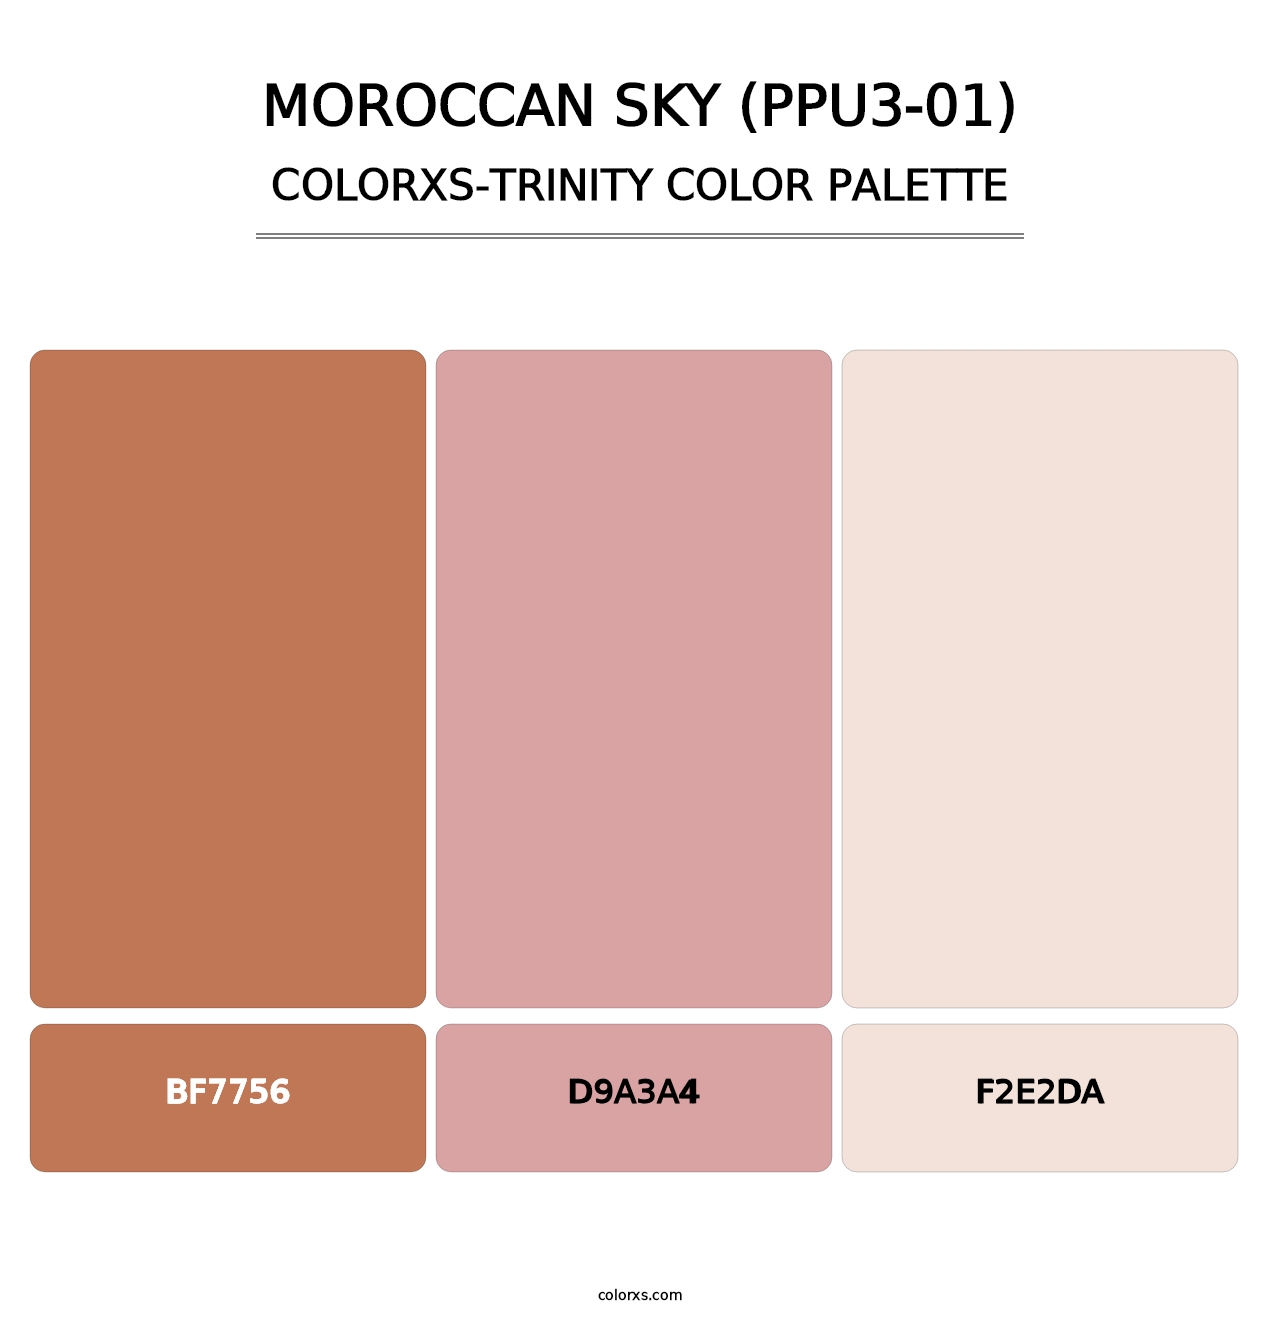 Moroccan Sky (PPU3-01) - Colorxs Trinity Palette